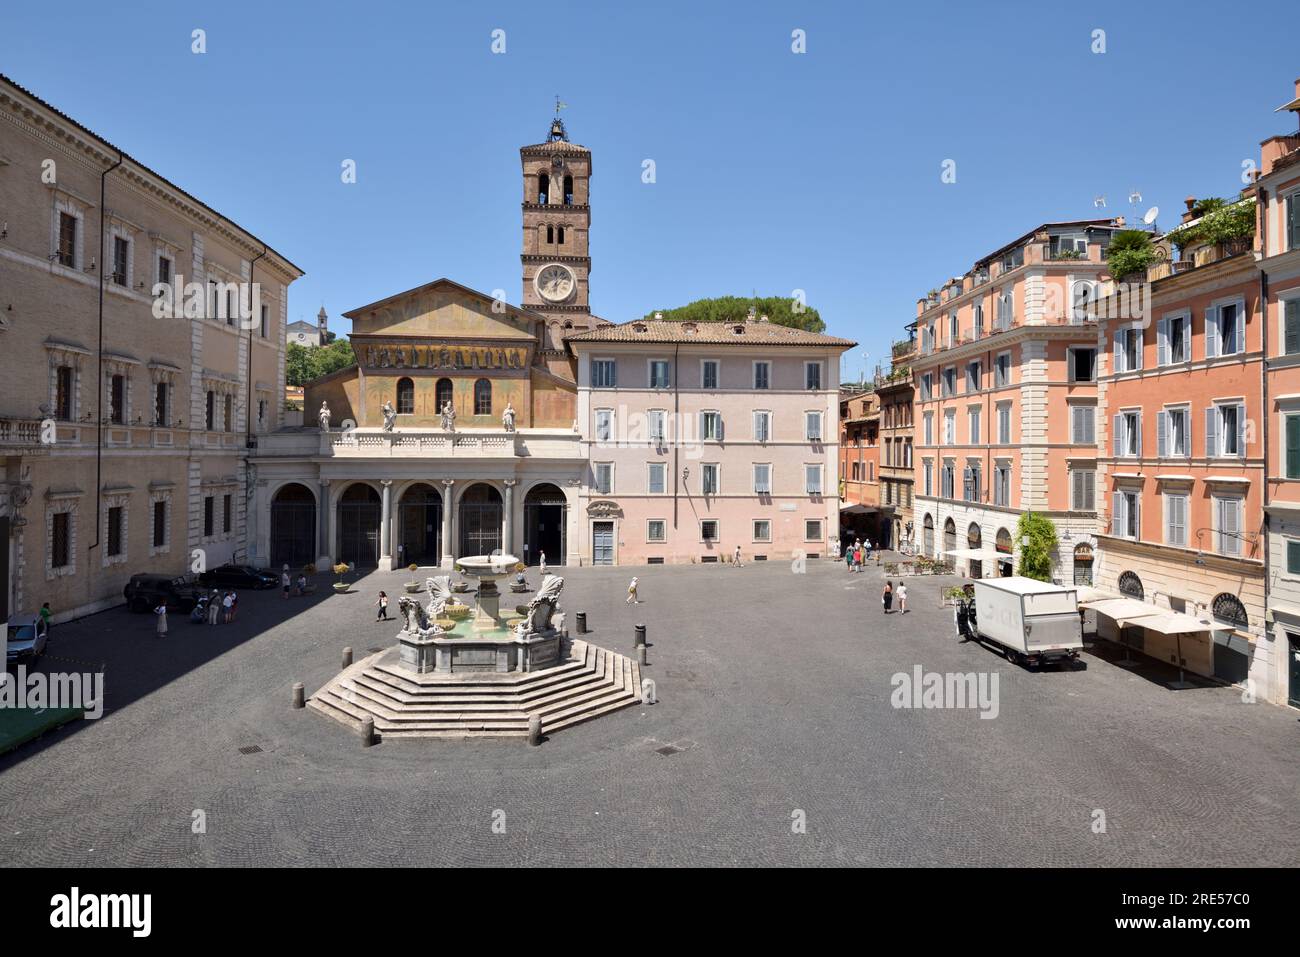 Piazza di Santa Maria in Trastevere, Rome, Italy Stock Photo - Alamy